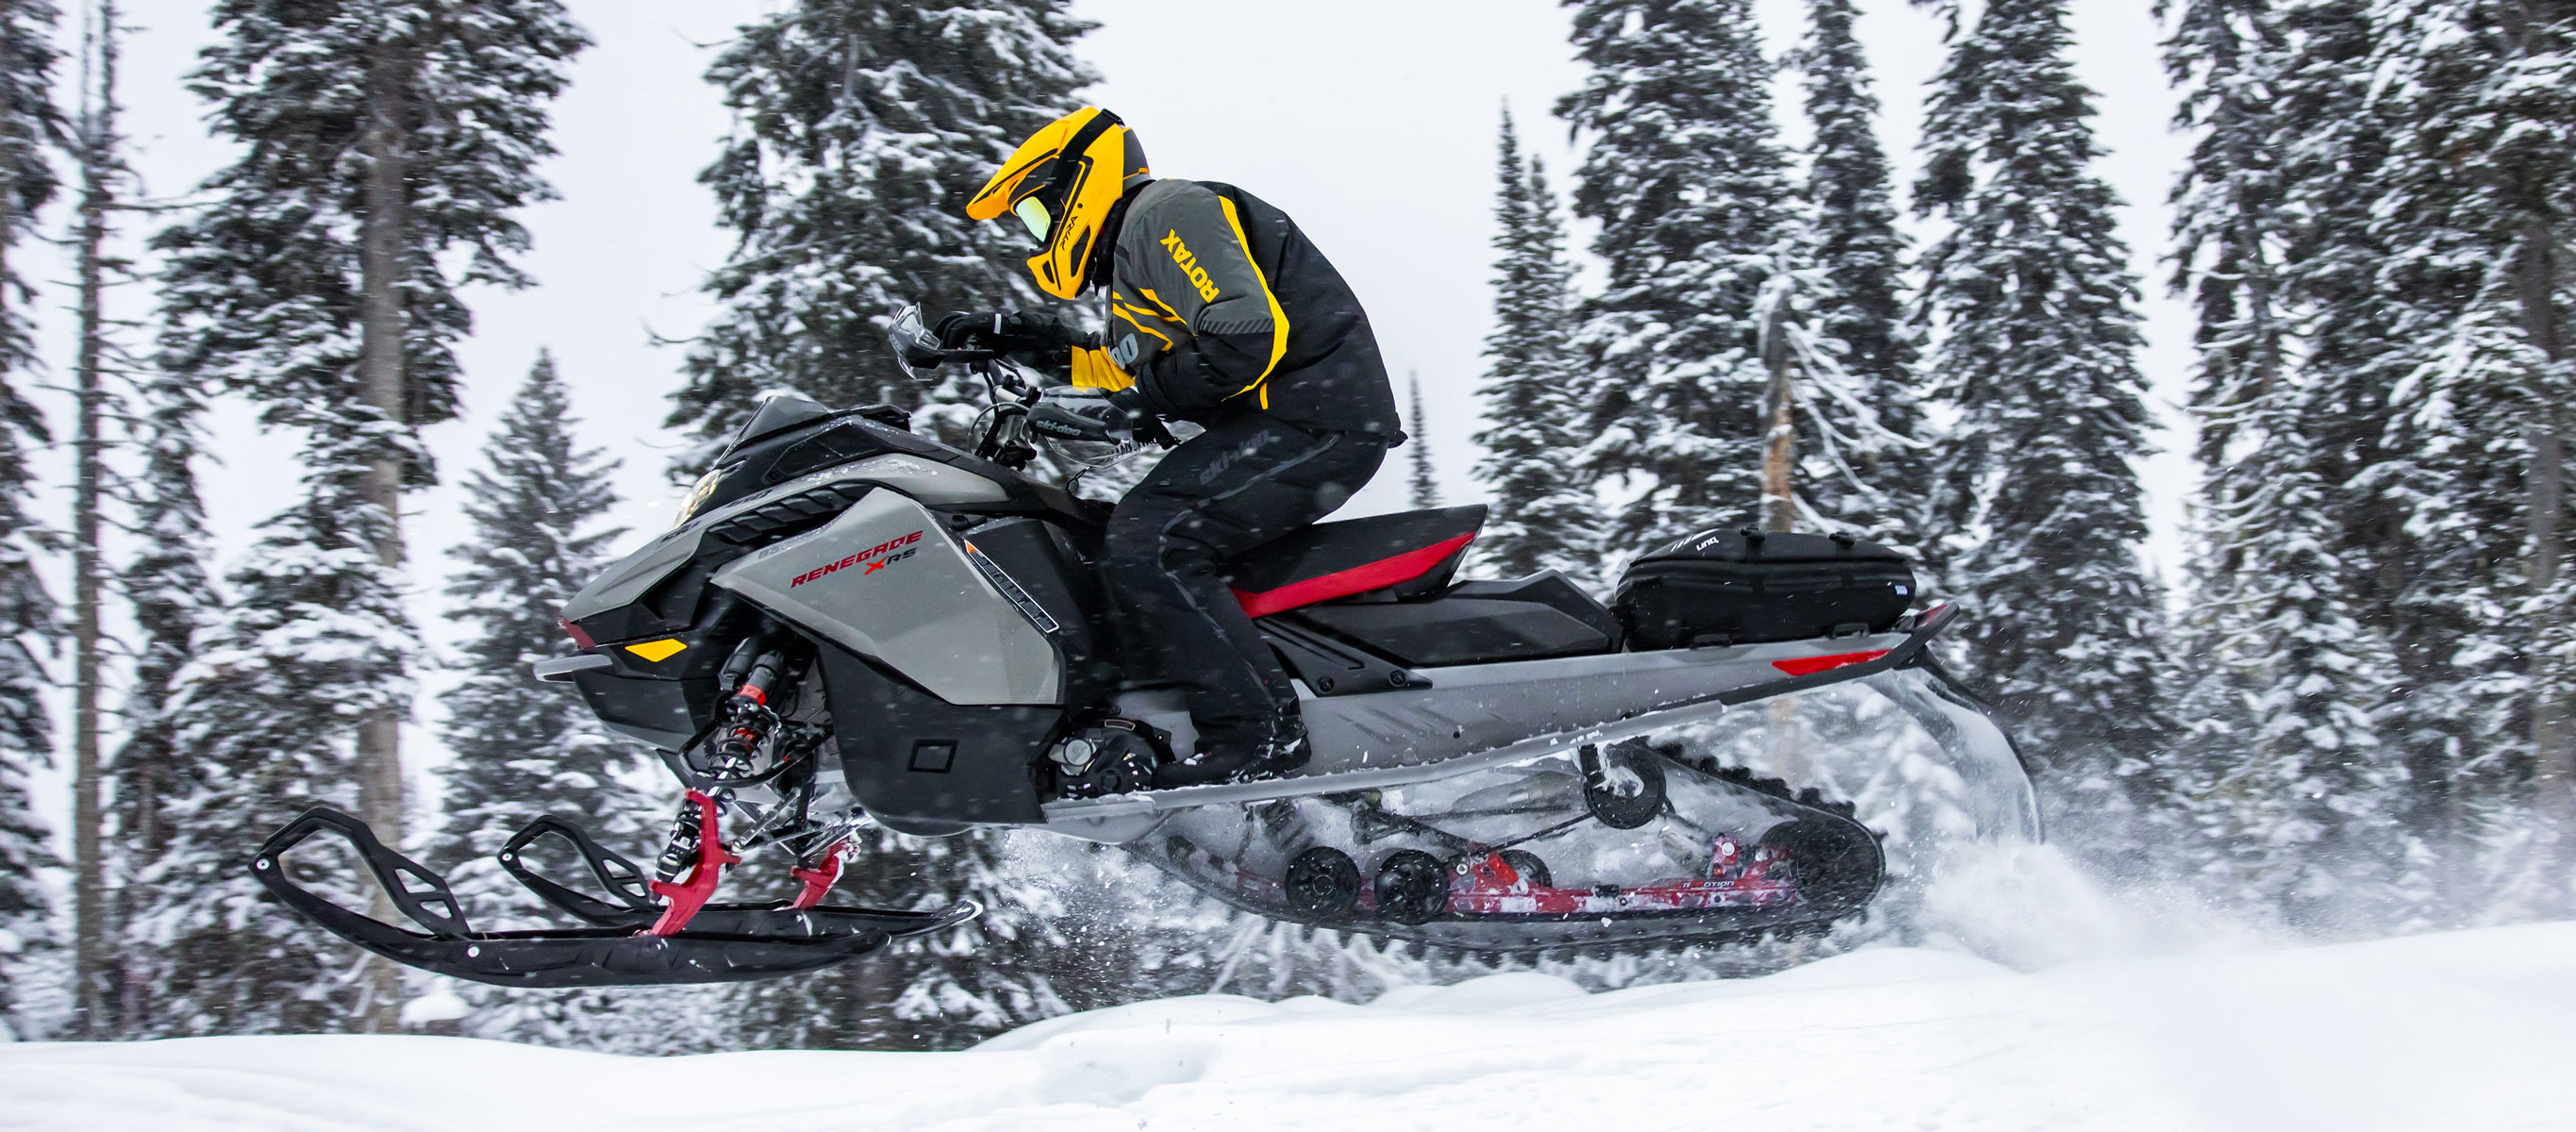 Man driving the Ski-Doo Renegade snowmobile on a trail